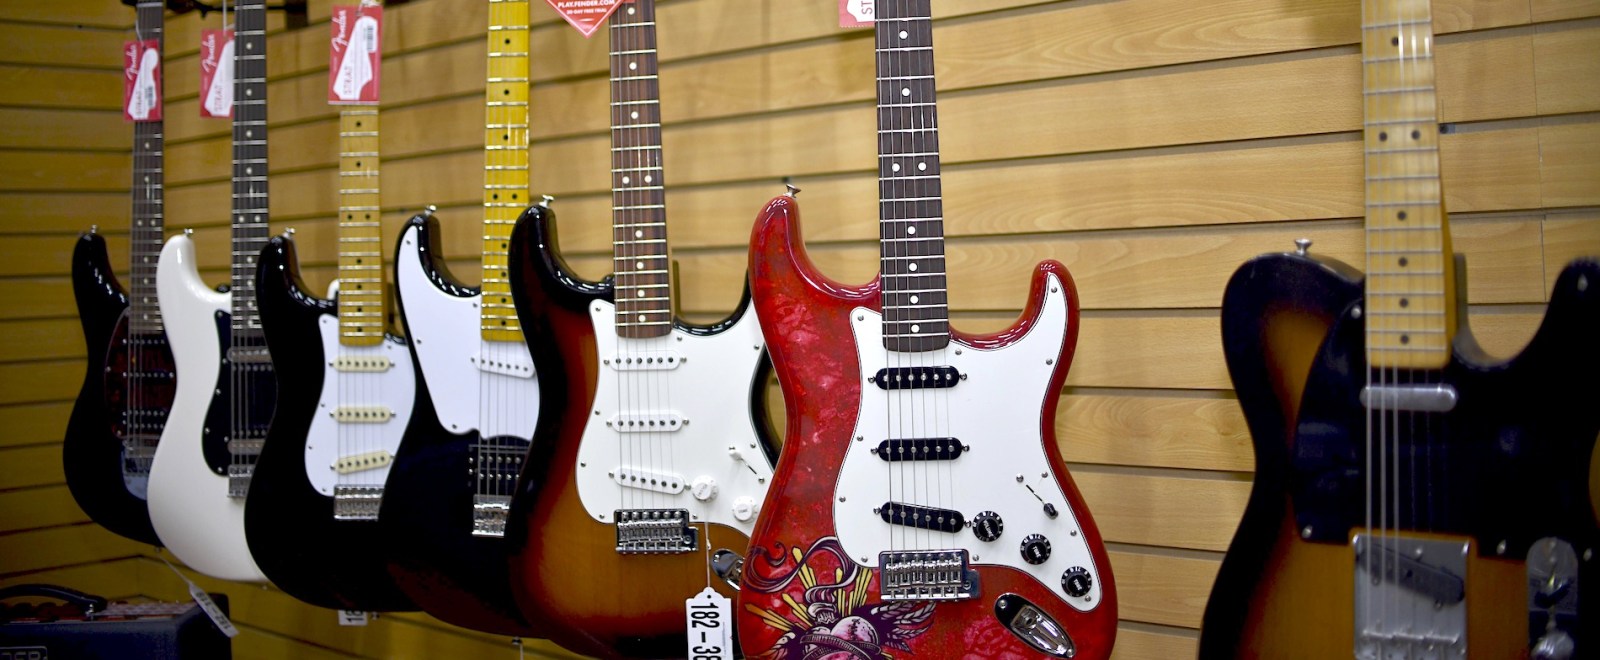 guitars-music-store-shop-getty-full.jpg